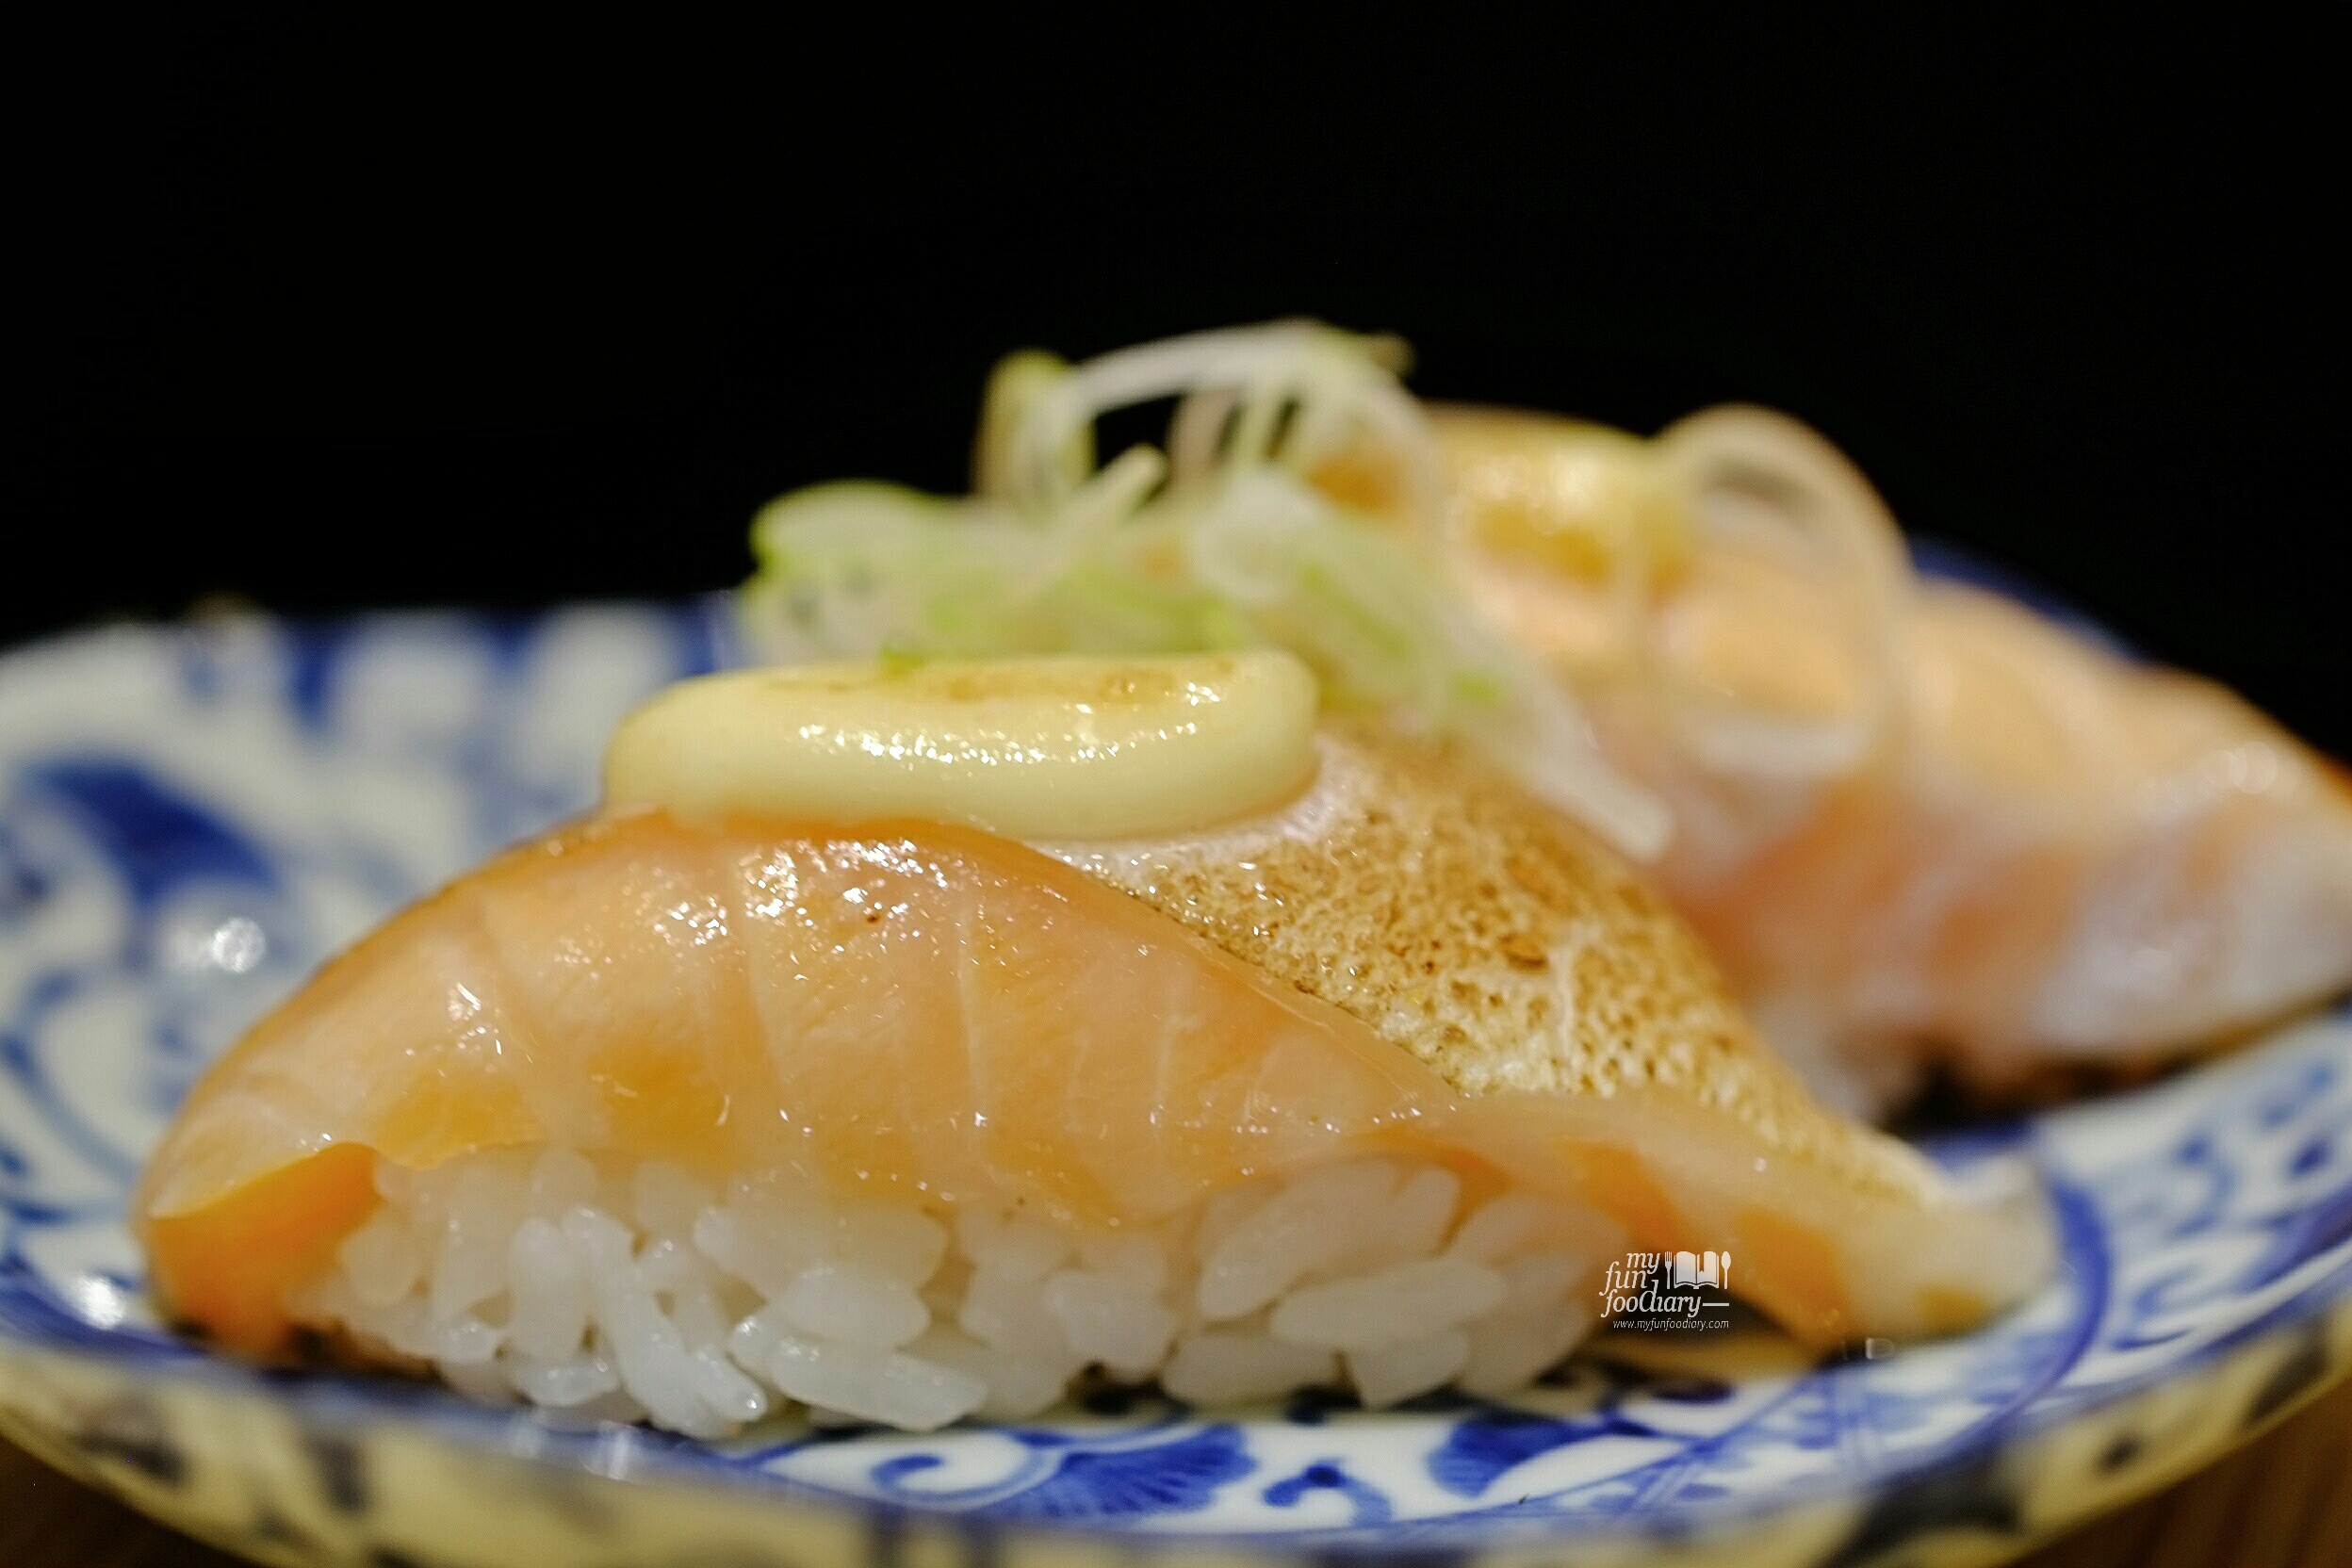 Roasted Fatty Salmon at Itacho Sushi Grand Indonesia by Myfunfoodiary